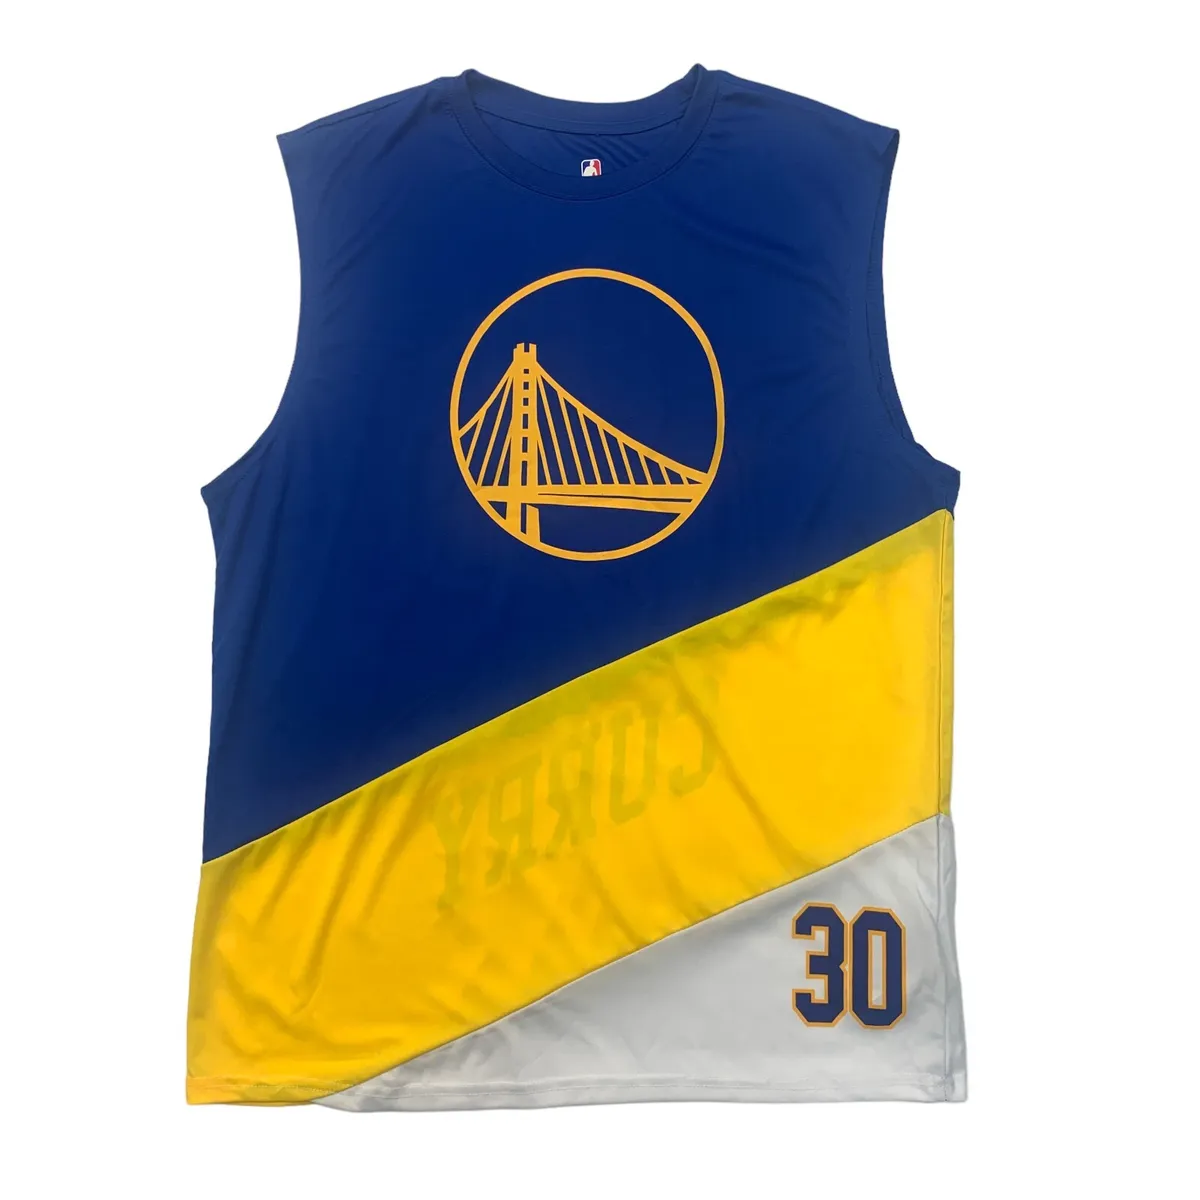 UNK Golden State Warriors Steph Curry Jersey Shirt Mens XL Extra Large NBA